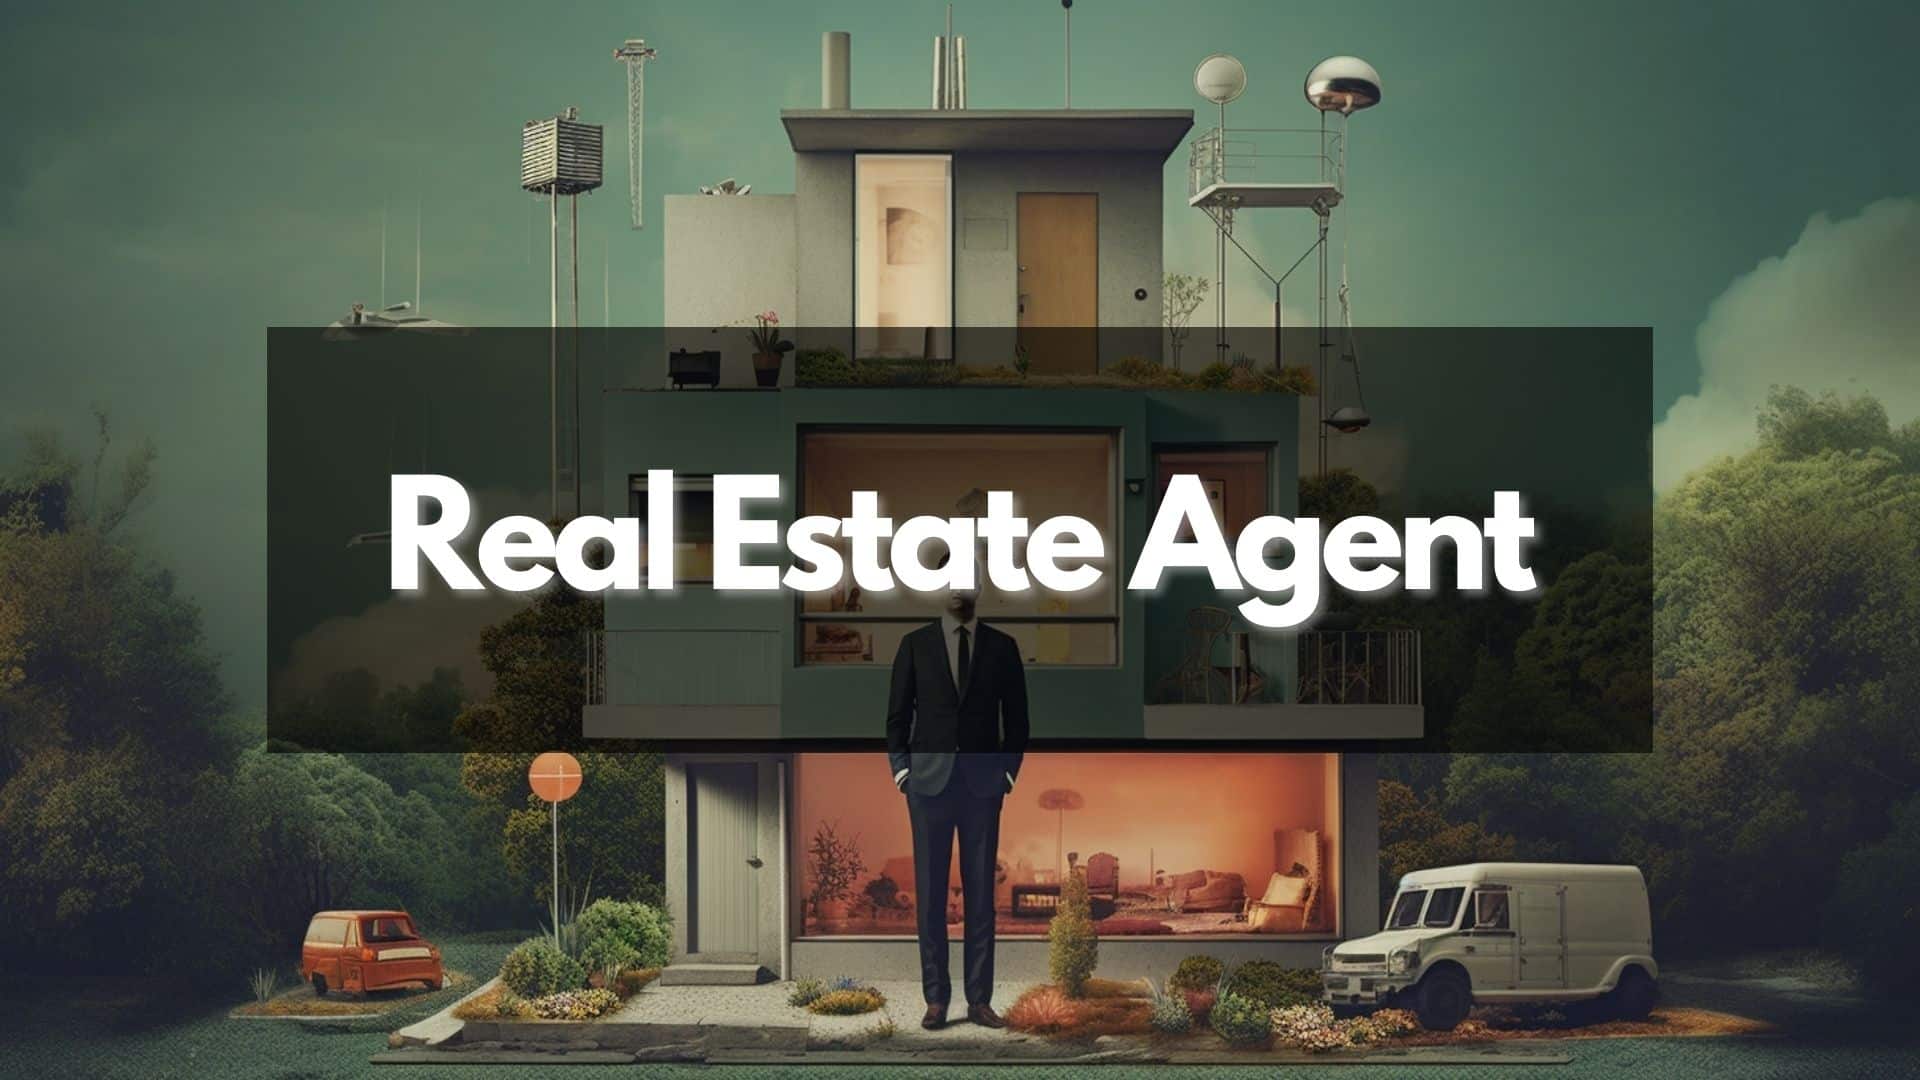 Real Estate Agent Definition